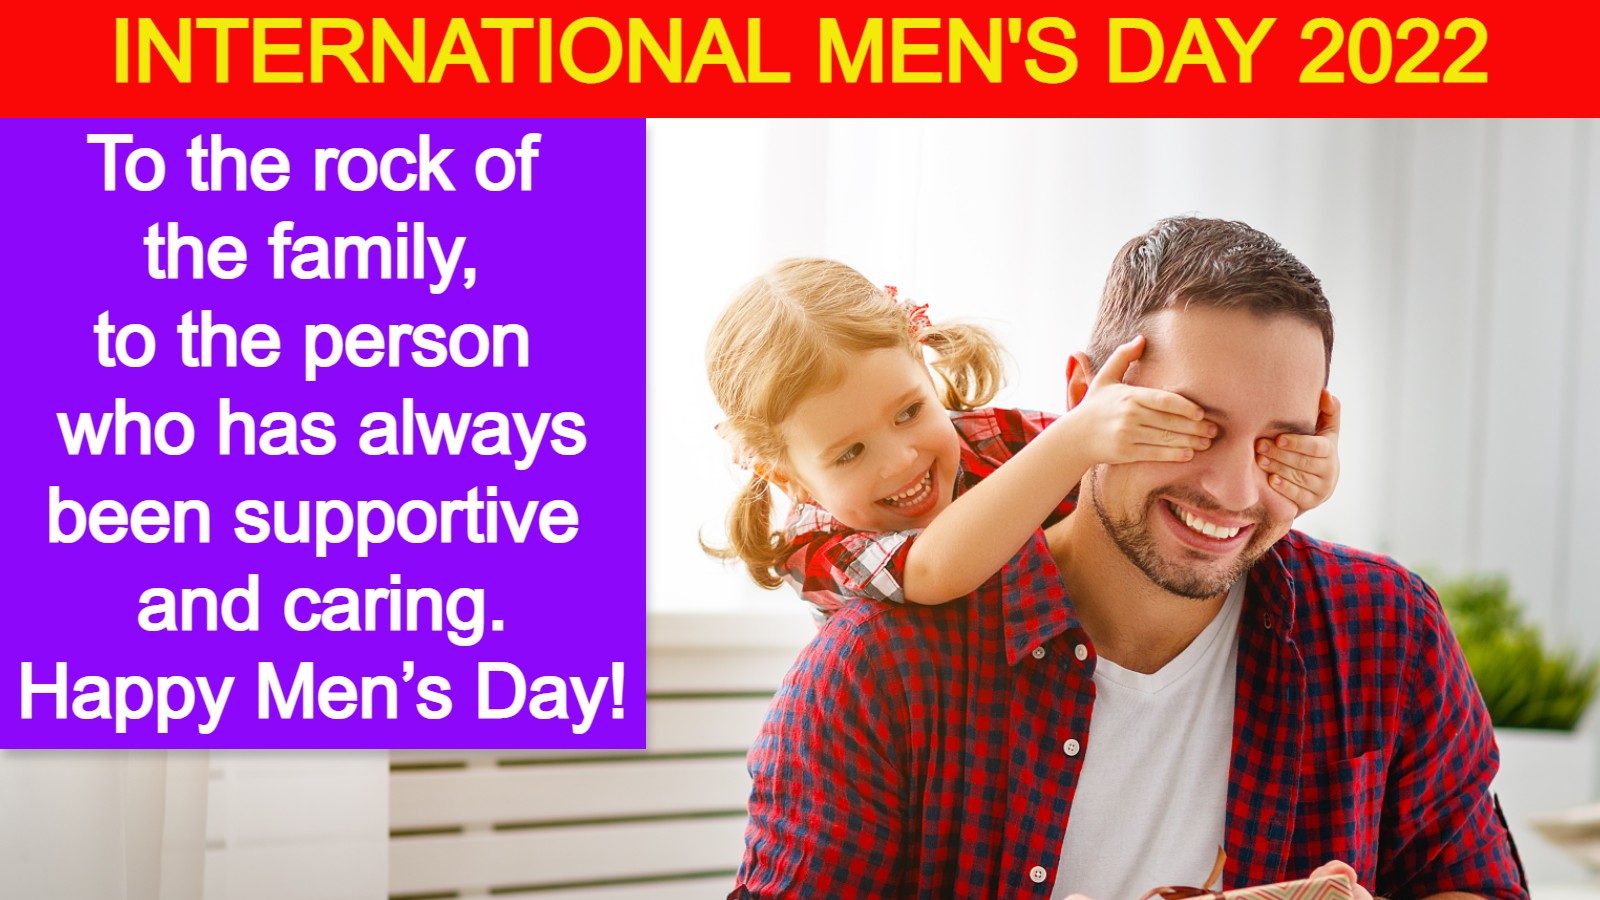 https://images.news18.com/ibnlive/uploads/2022/11/international-men-day-2022-gift-ideas-166874613016x9.jpg